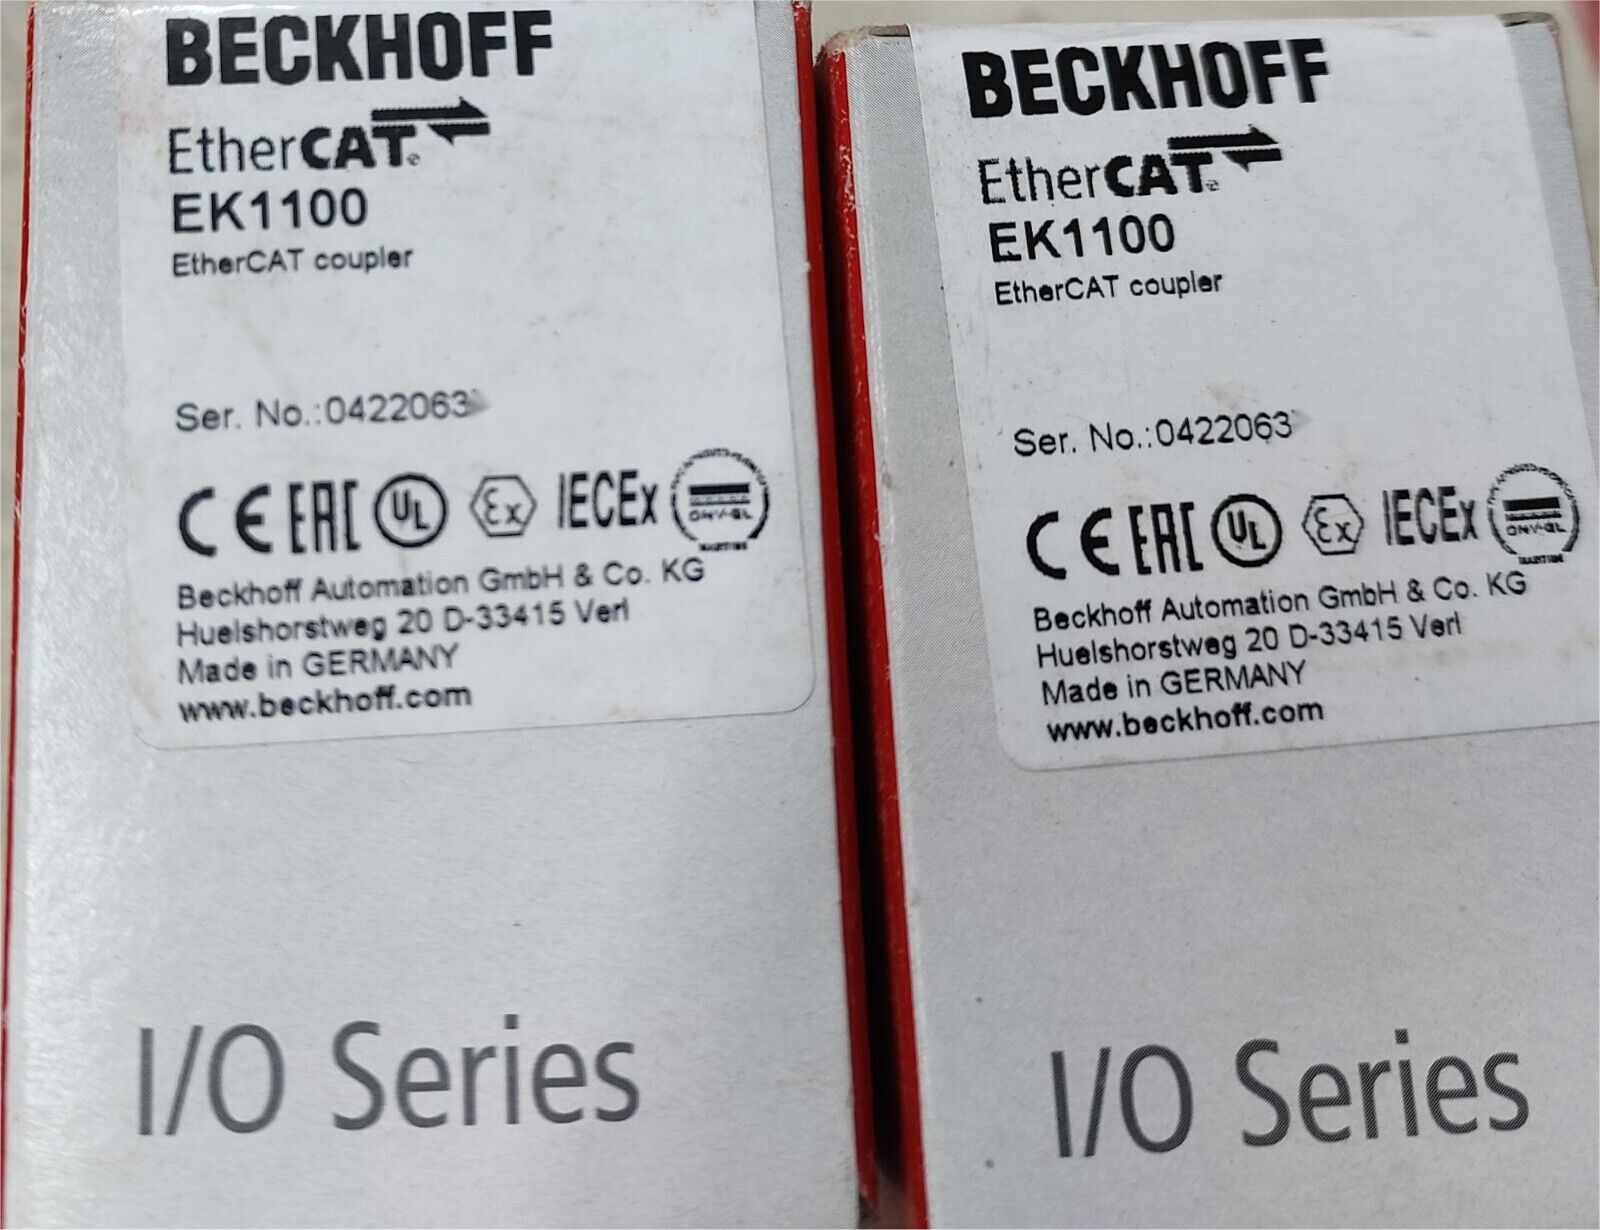 New and sealed EK1100 Beckhoff EtherCAT Coupler